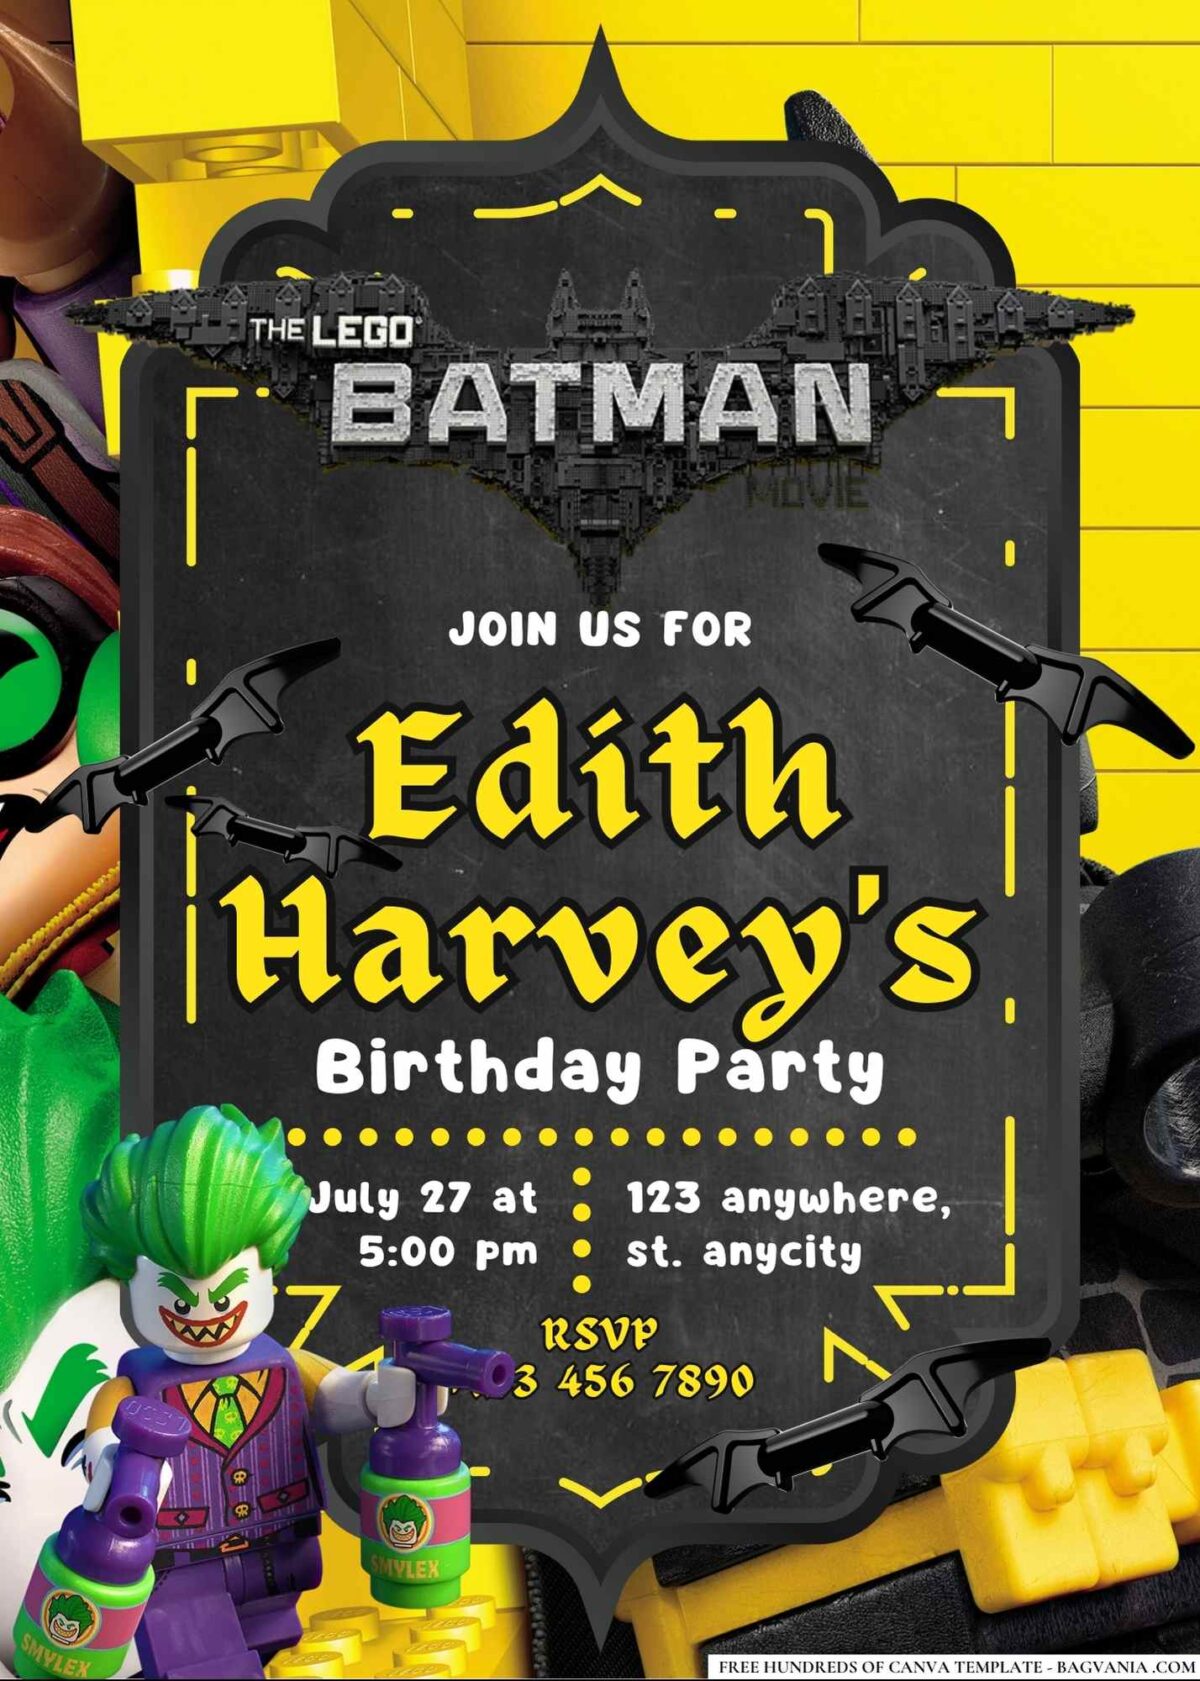 FREE Editable The Lego Batman Movie Birthday Invitations